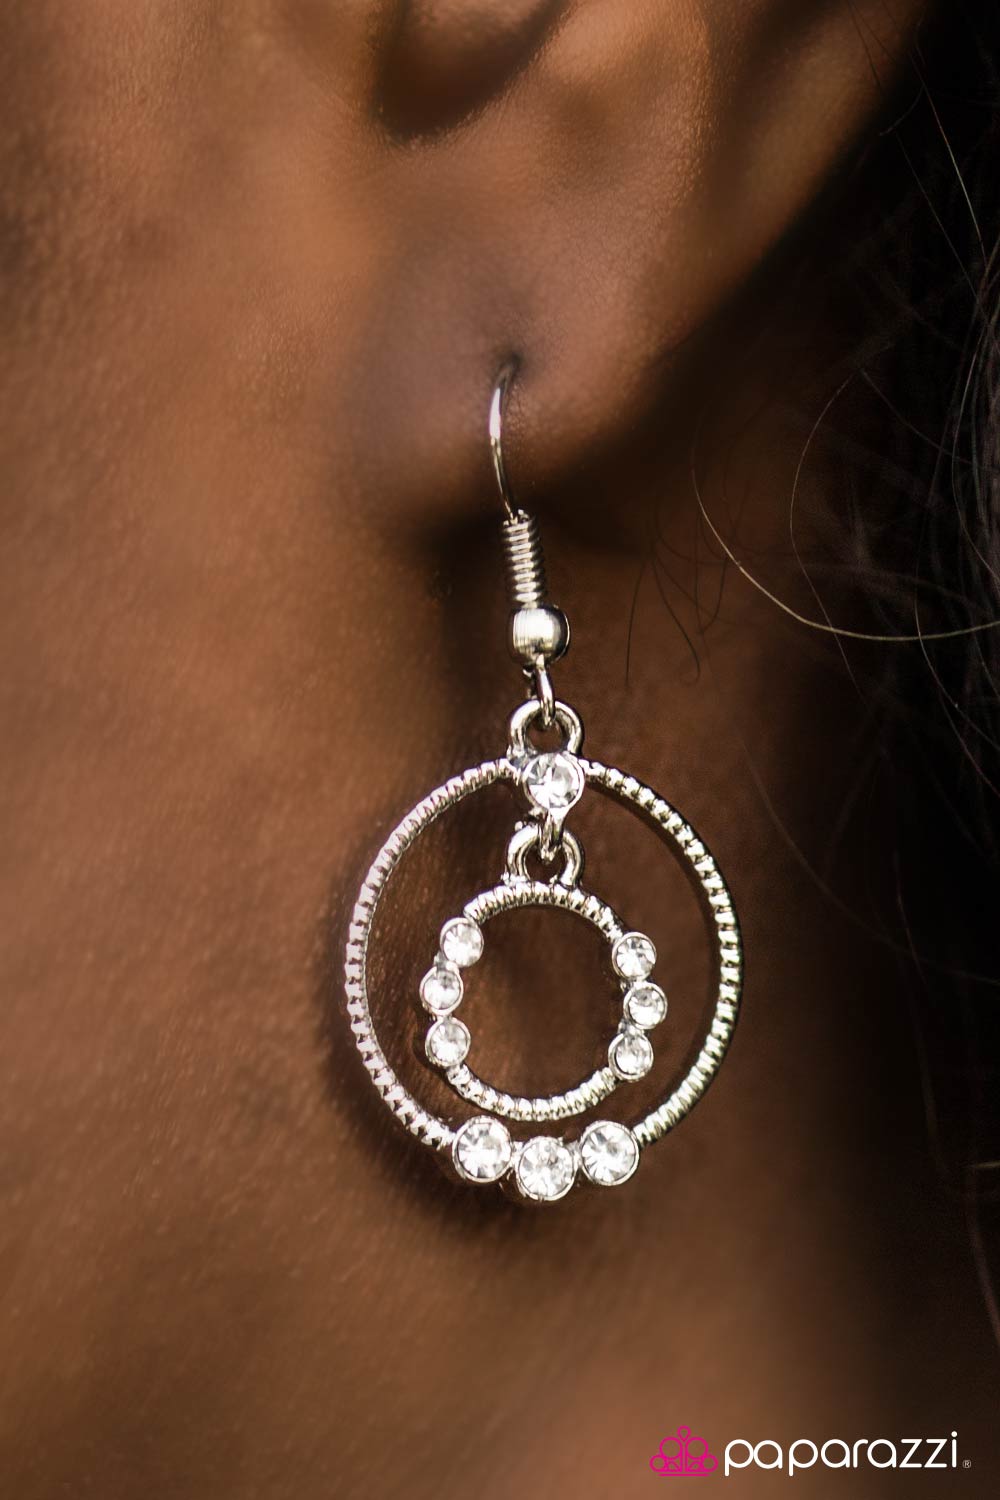 On The Bubble - White - Paparazzi earrings